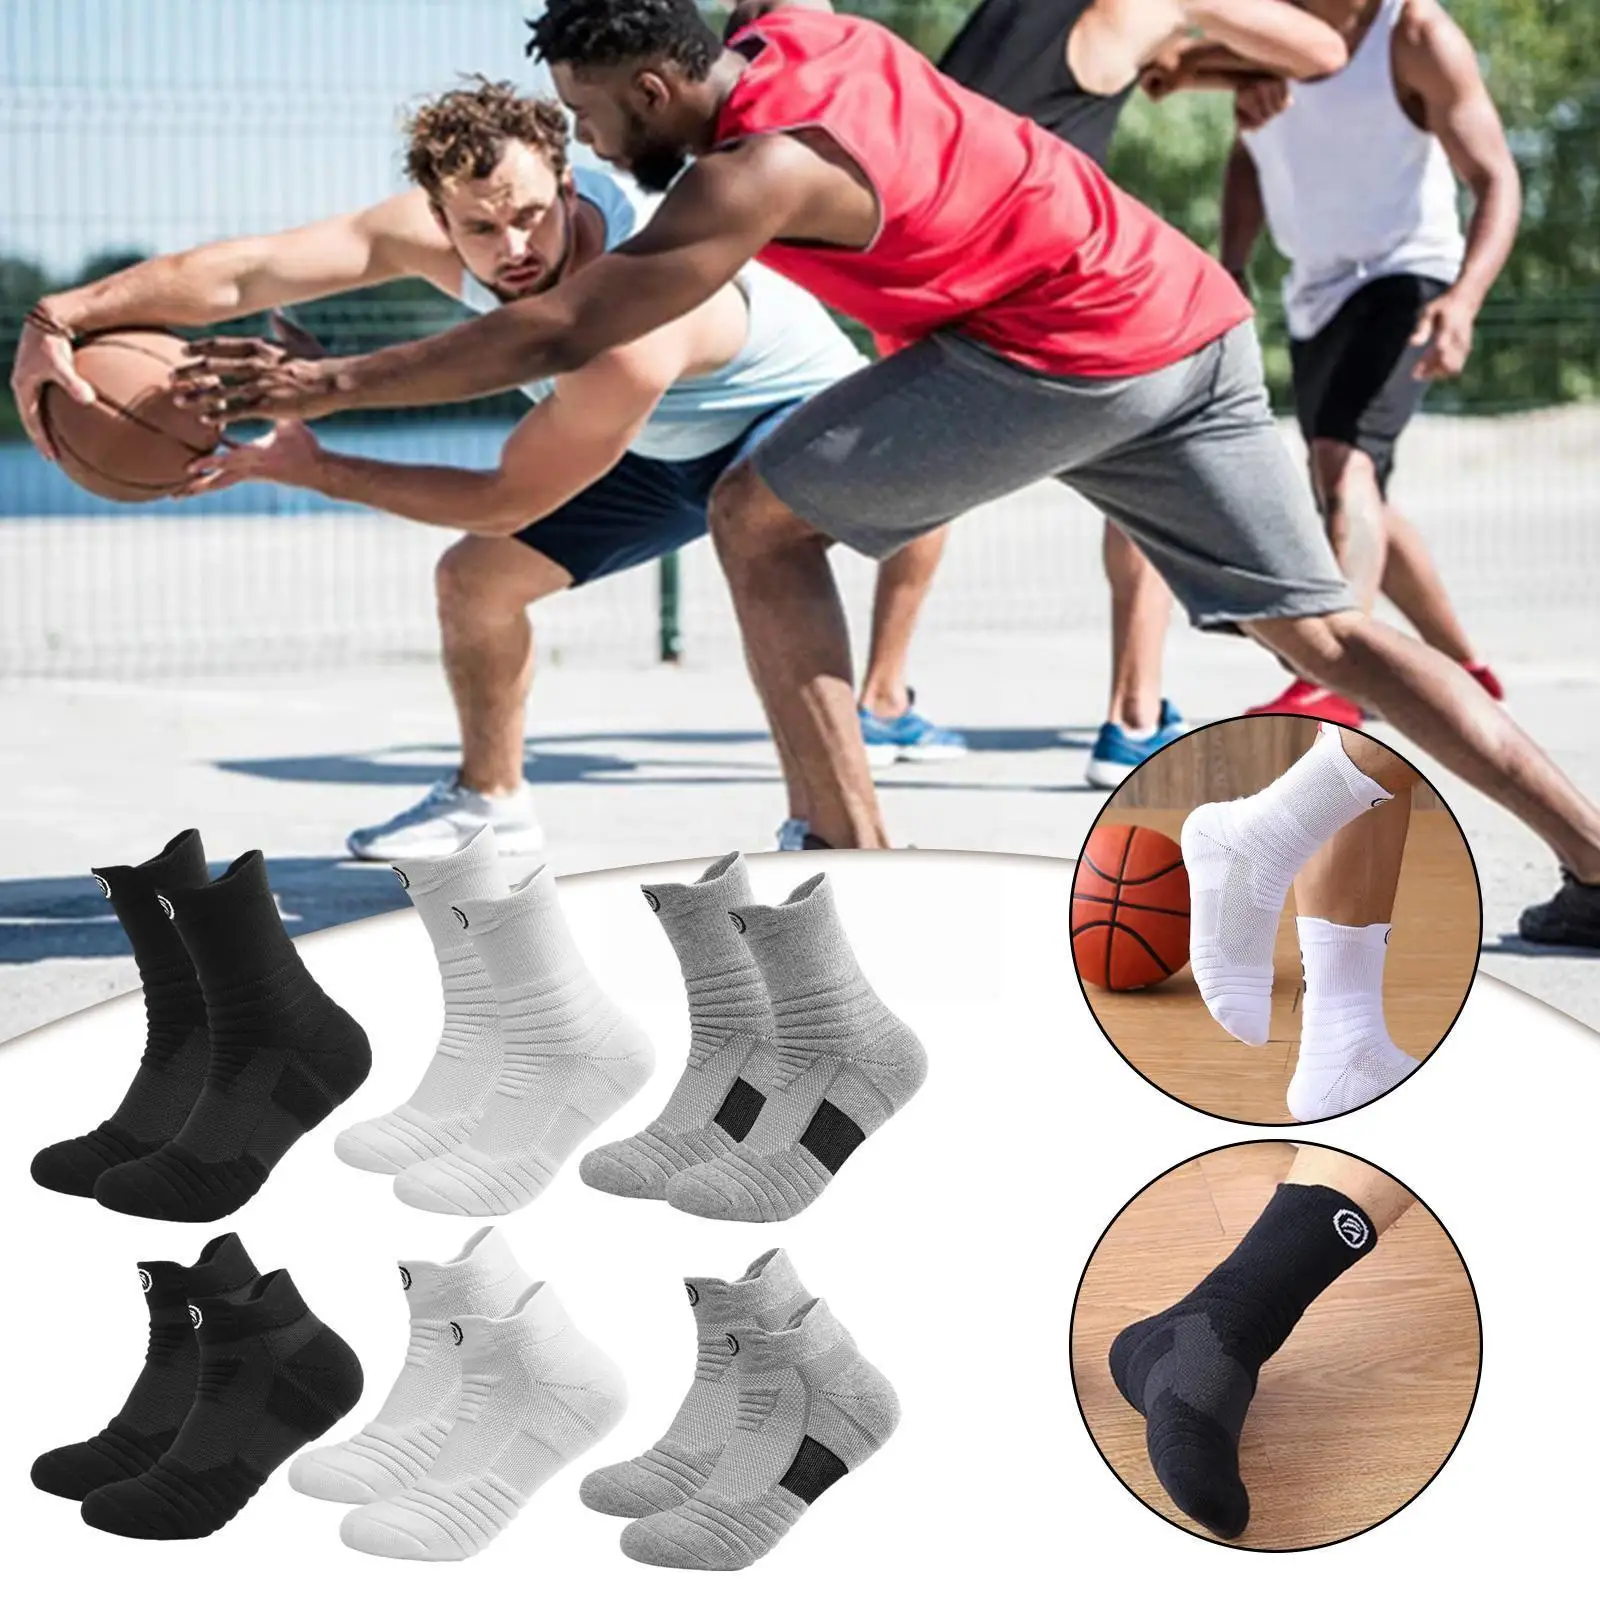 

5pairs/lot Men's Socks Compression Stockings Breathable Socks Cycling Sports Elastic Moisture Wicking High Tube Basketball F9u7